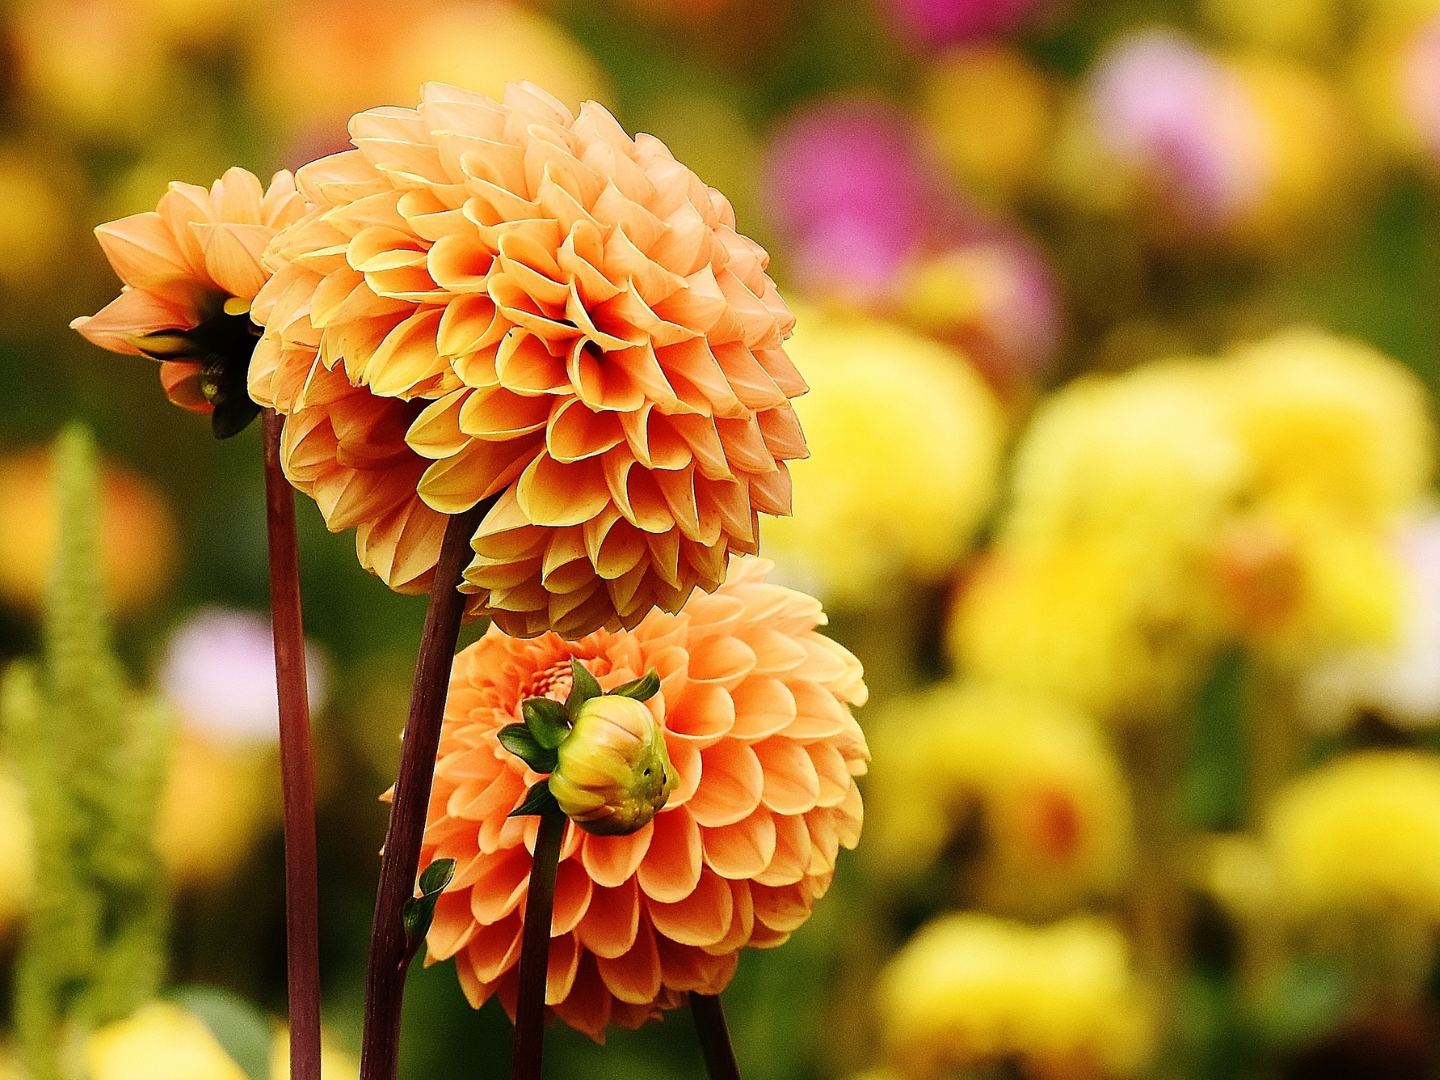 Yellow orange Dahlia flowers